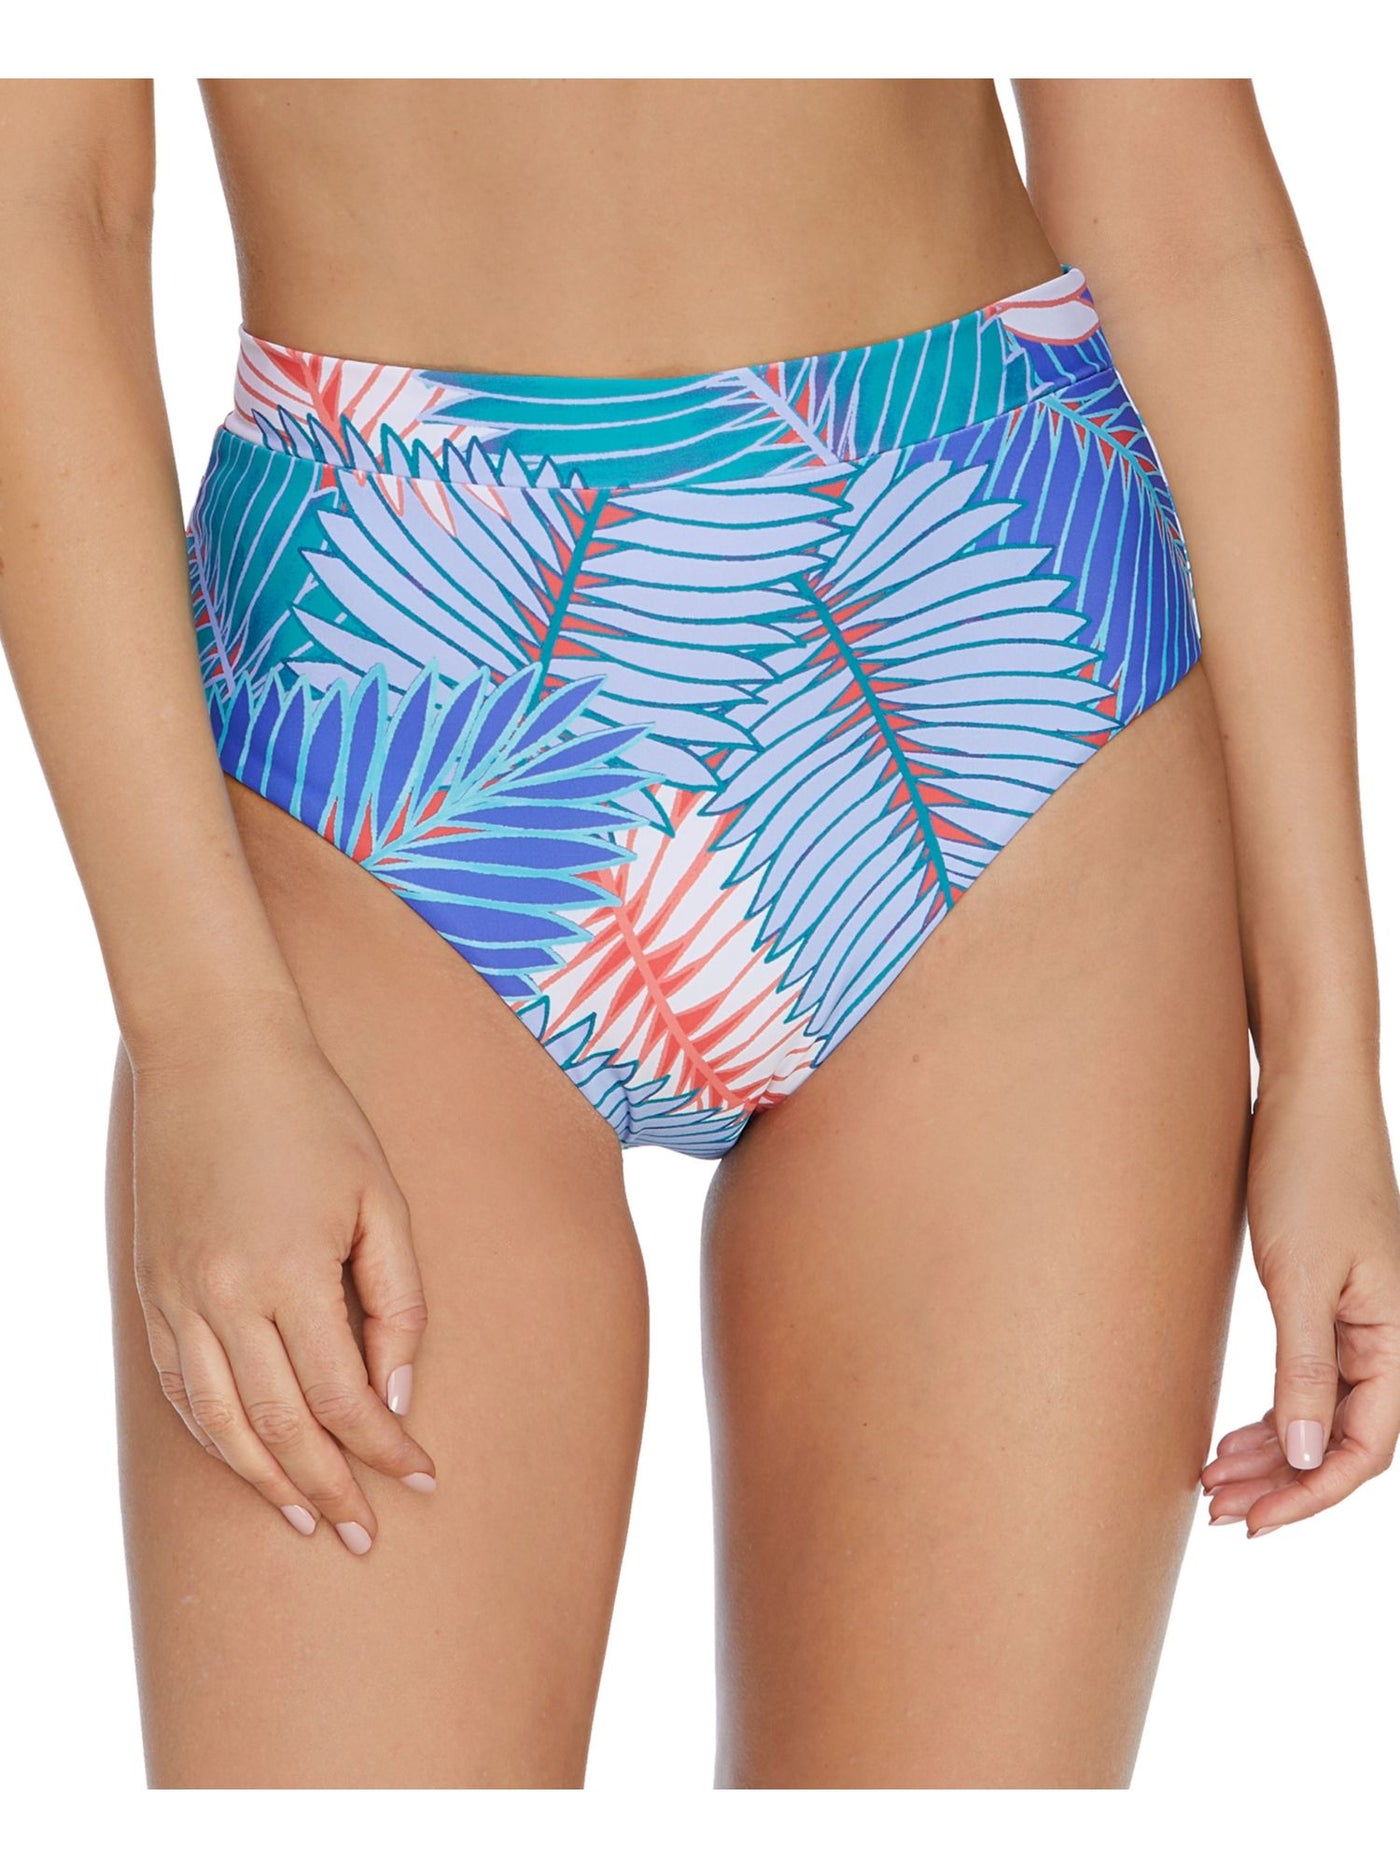 RAISINS Women's Blue Palm Print Stretch Lined Bikini Moderate Coverage High Waisted Swimsuit Bottom S